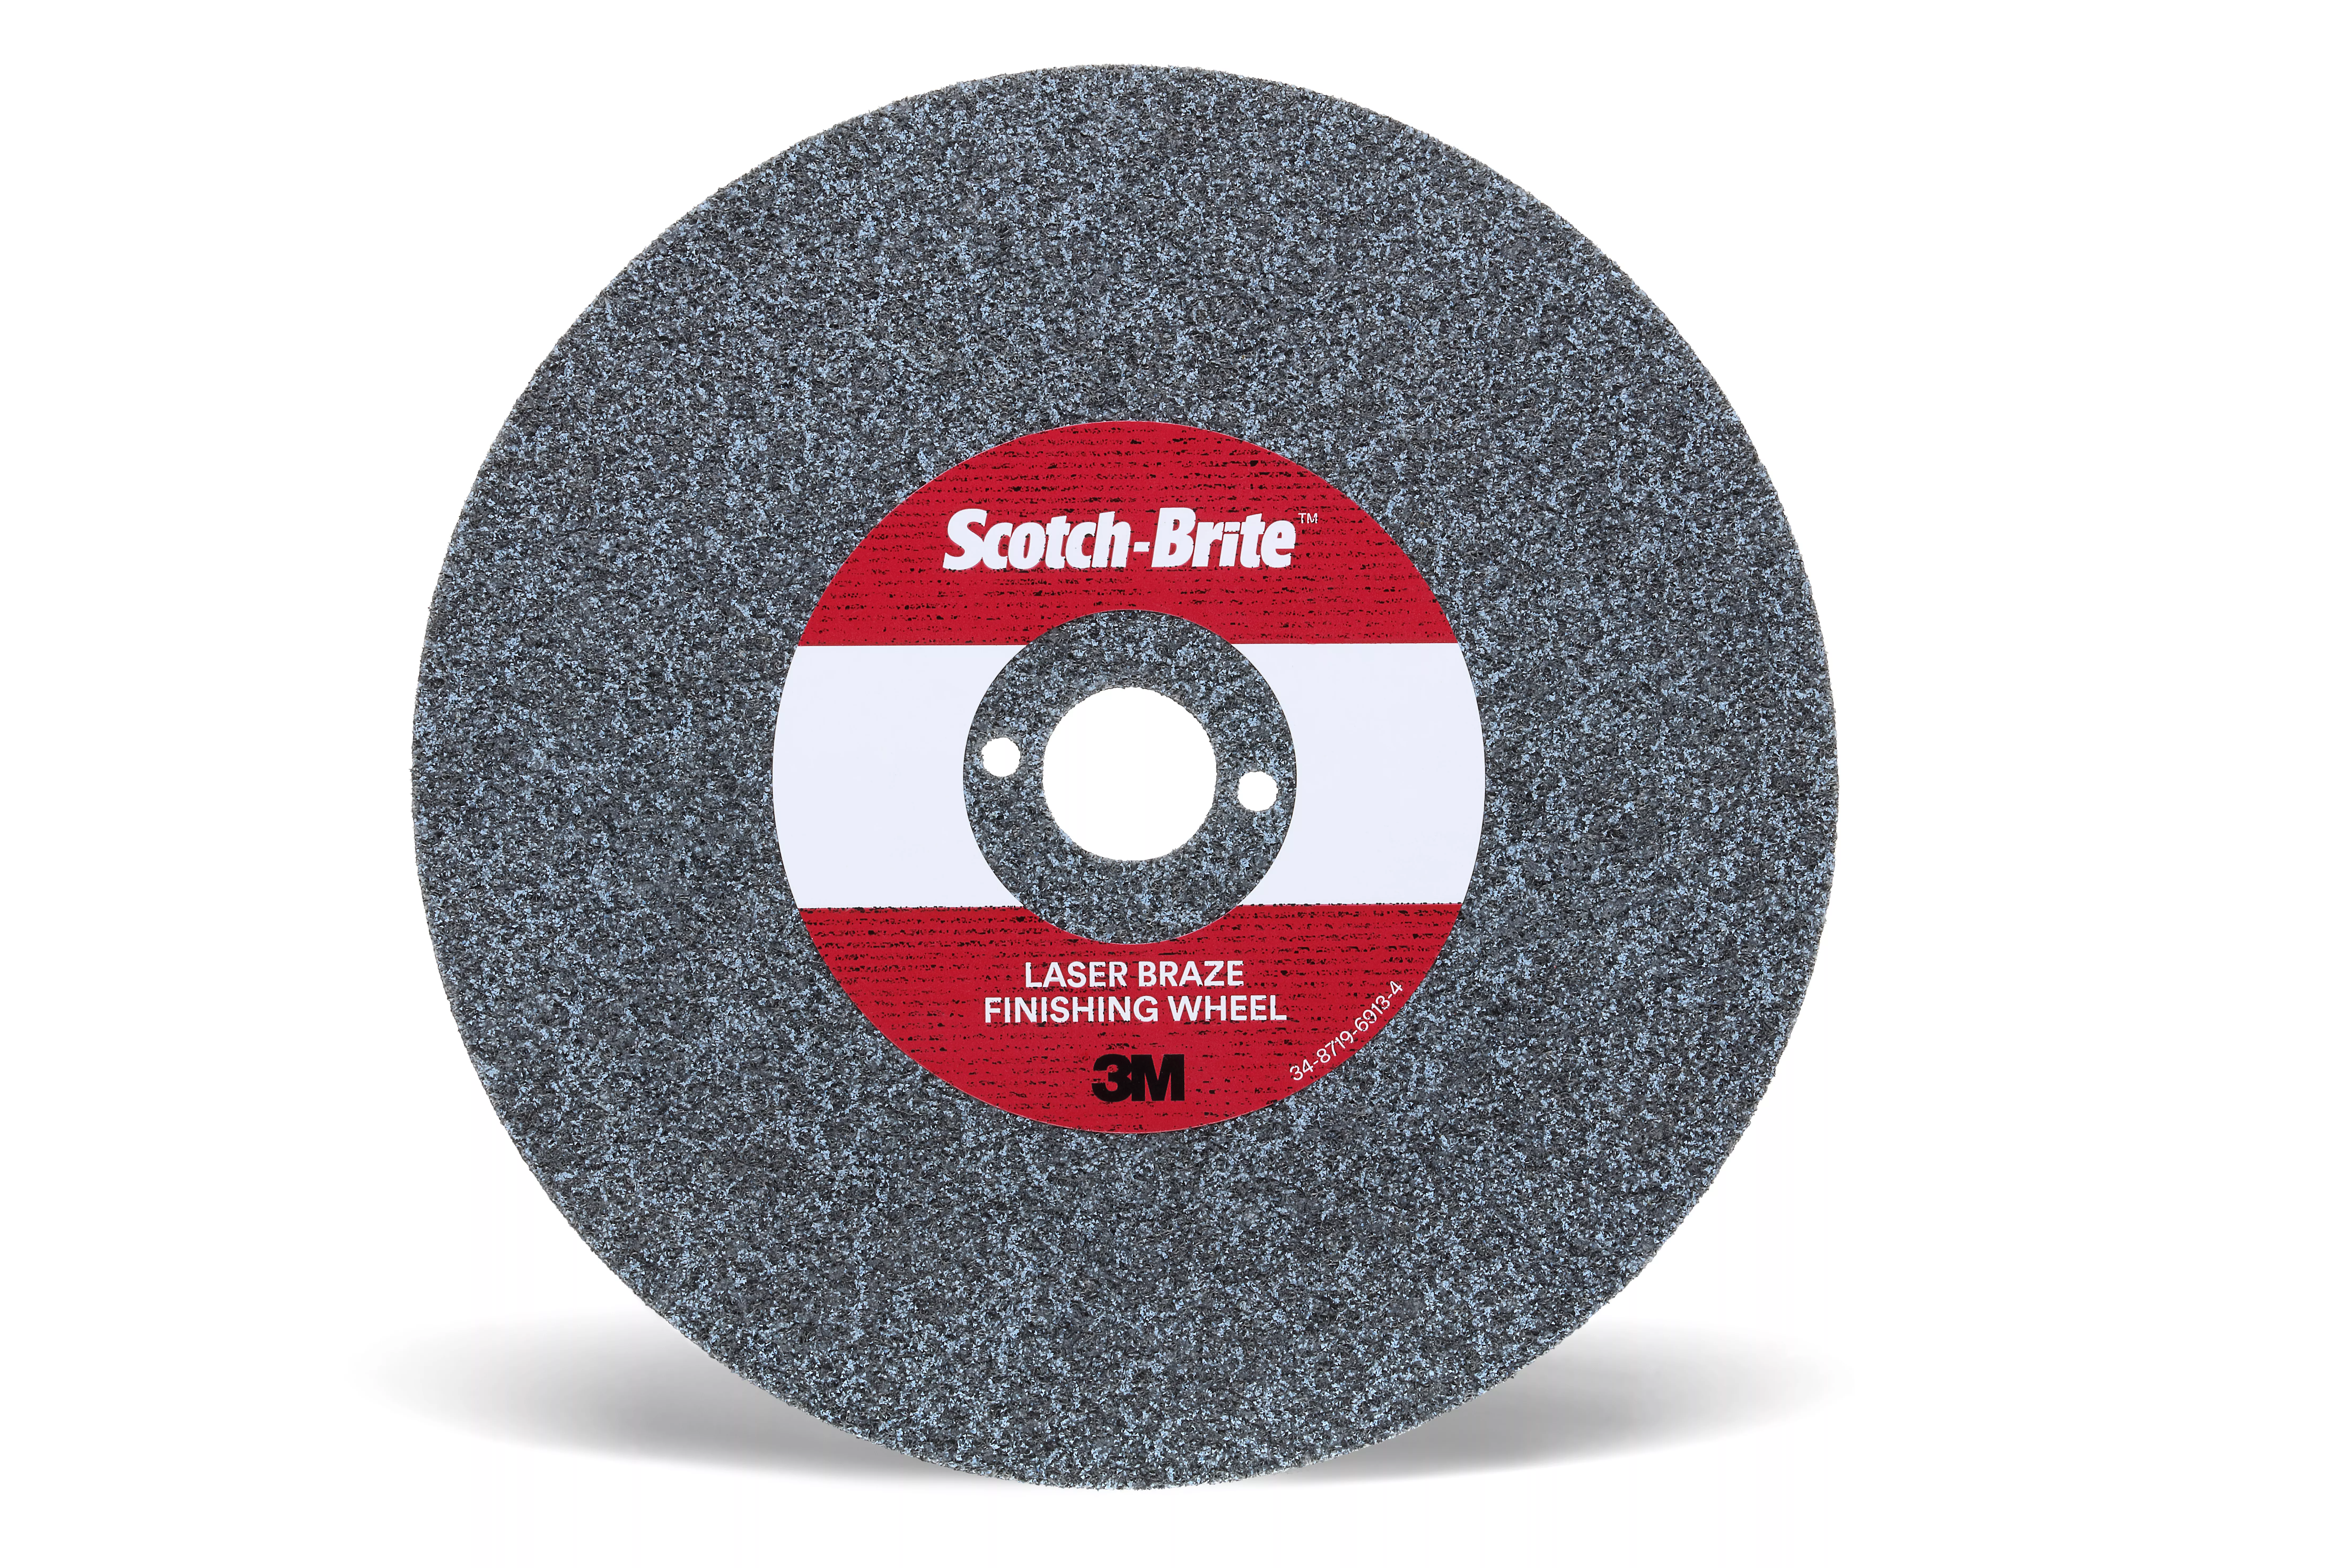 SKU 7100117420 | Scotch-Brite™ Laser Braze Finishing Wheel